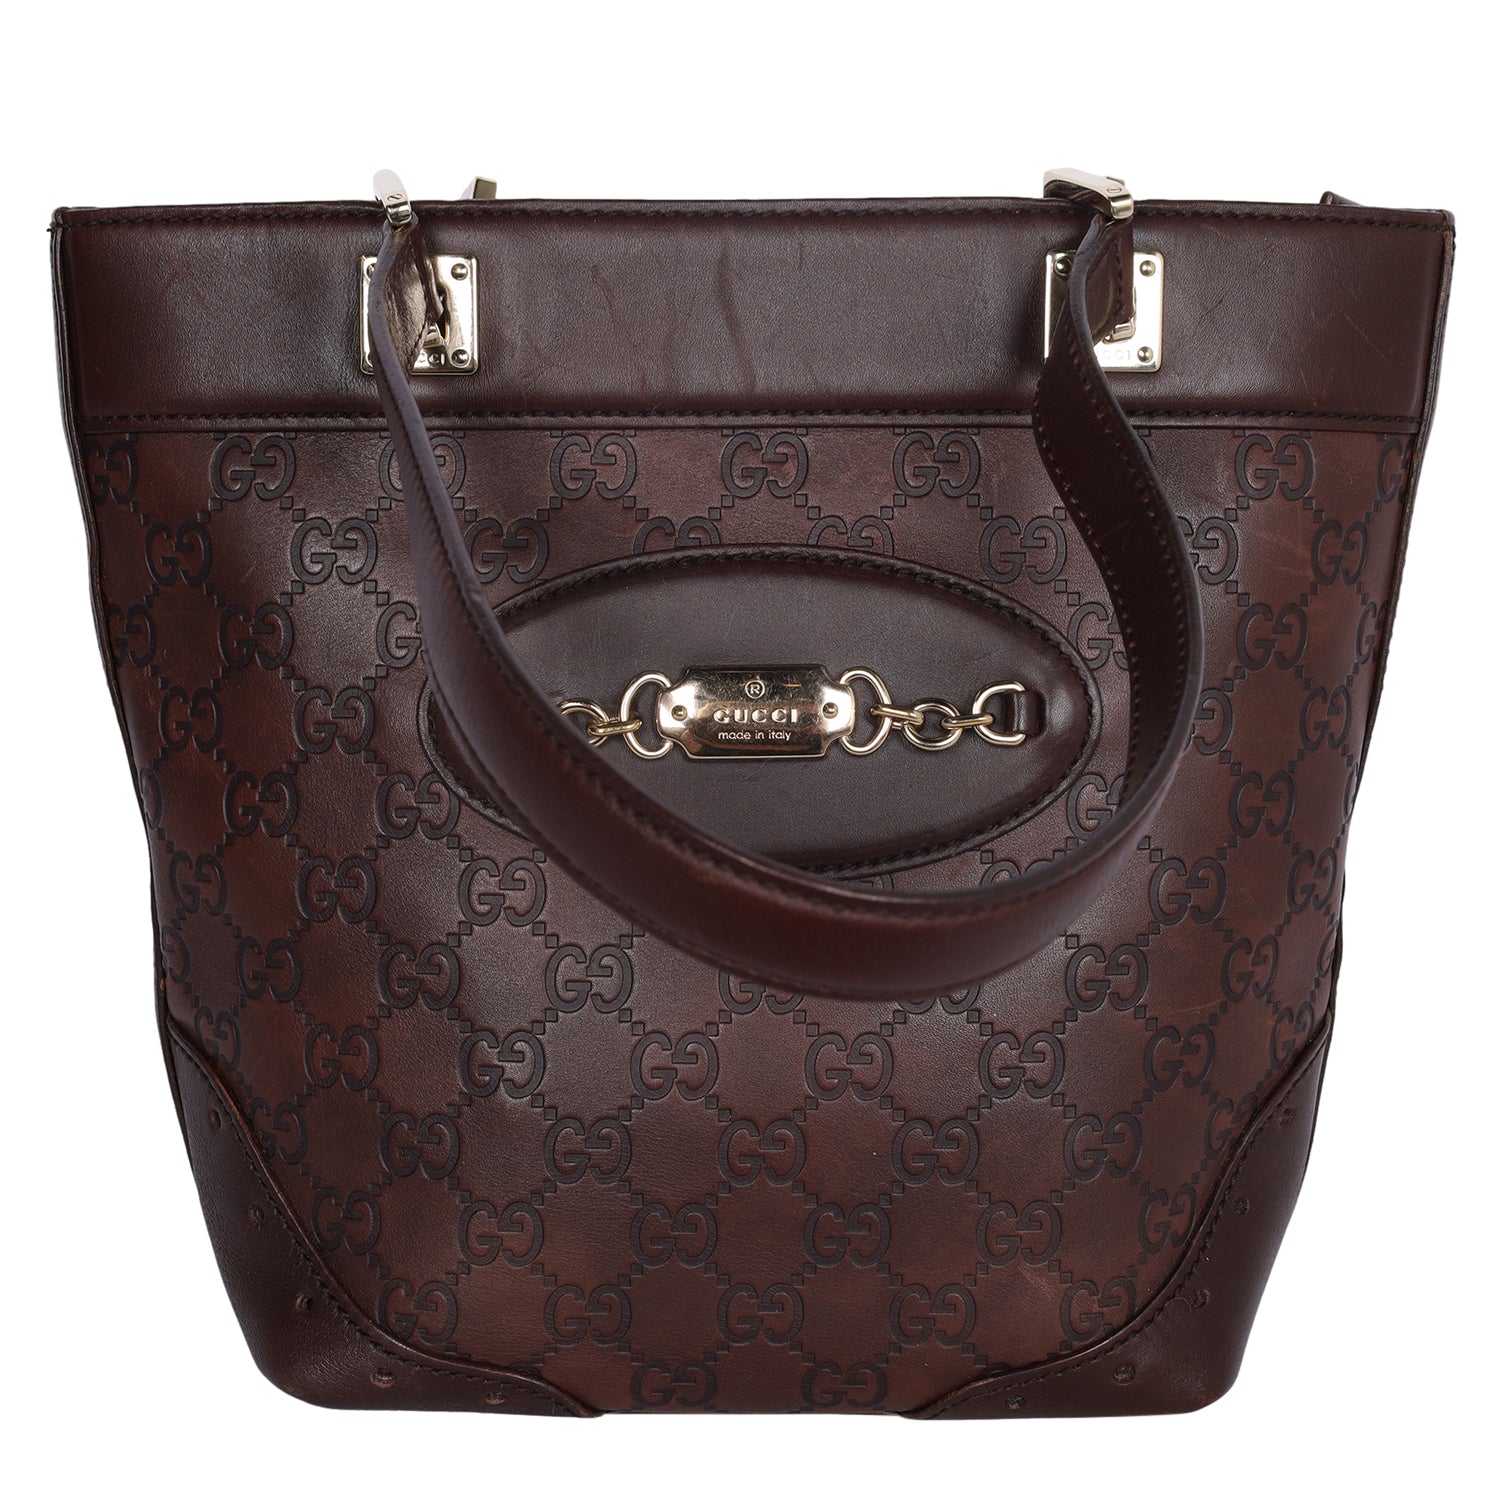 Vintage Gucci Medium Brown GG Embossed Leather Satchel Bag Handbag Authentic